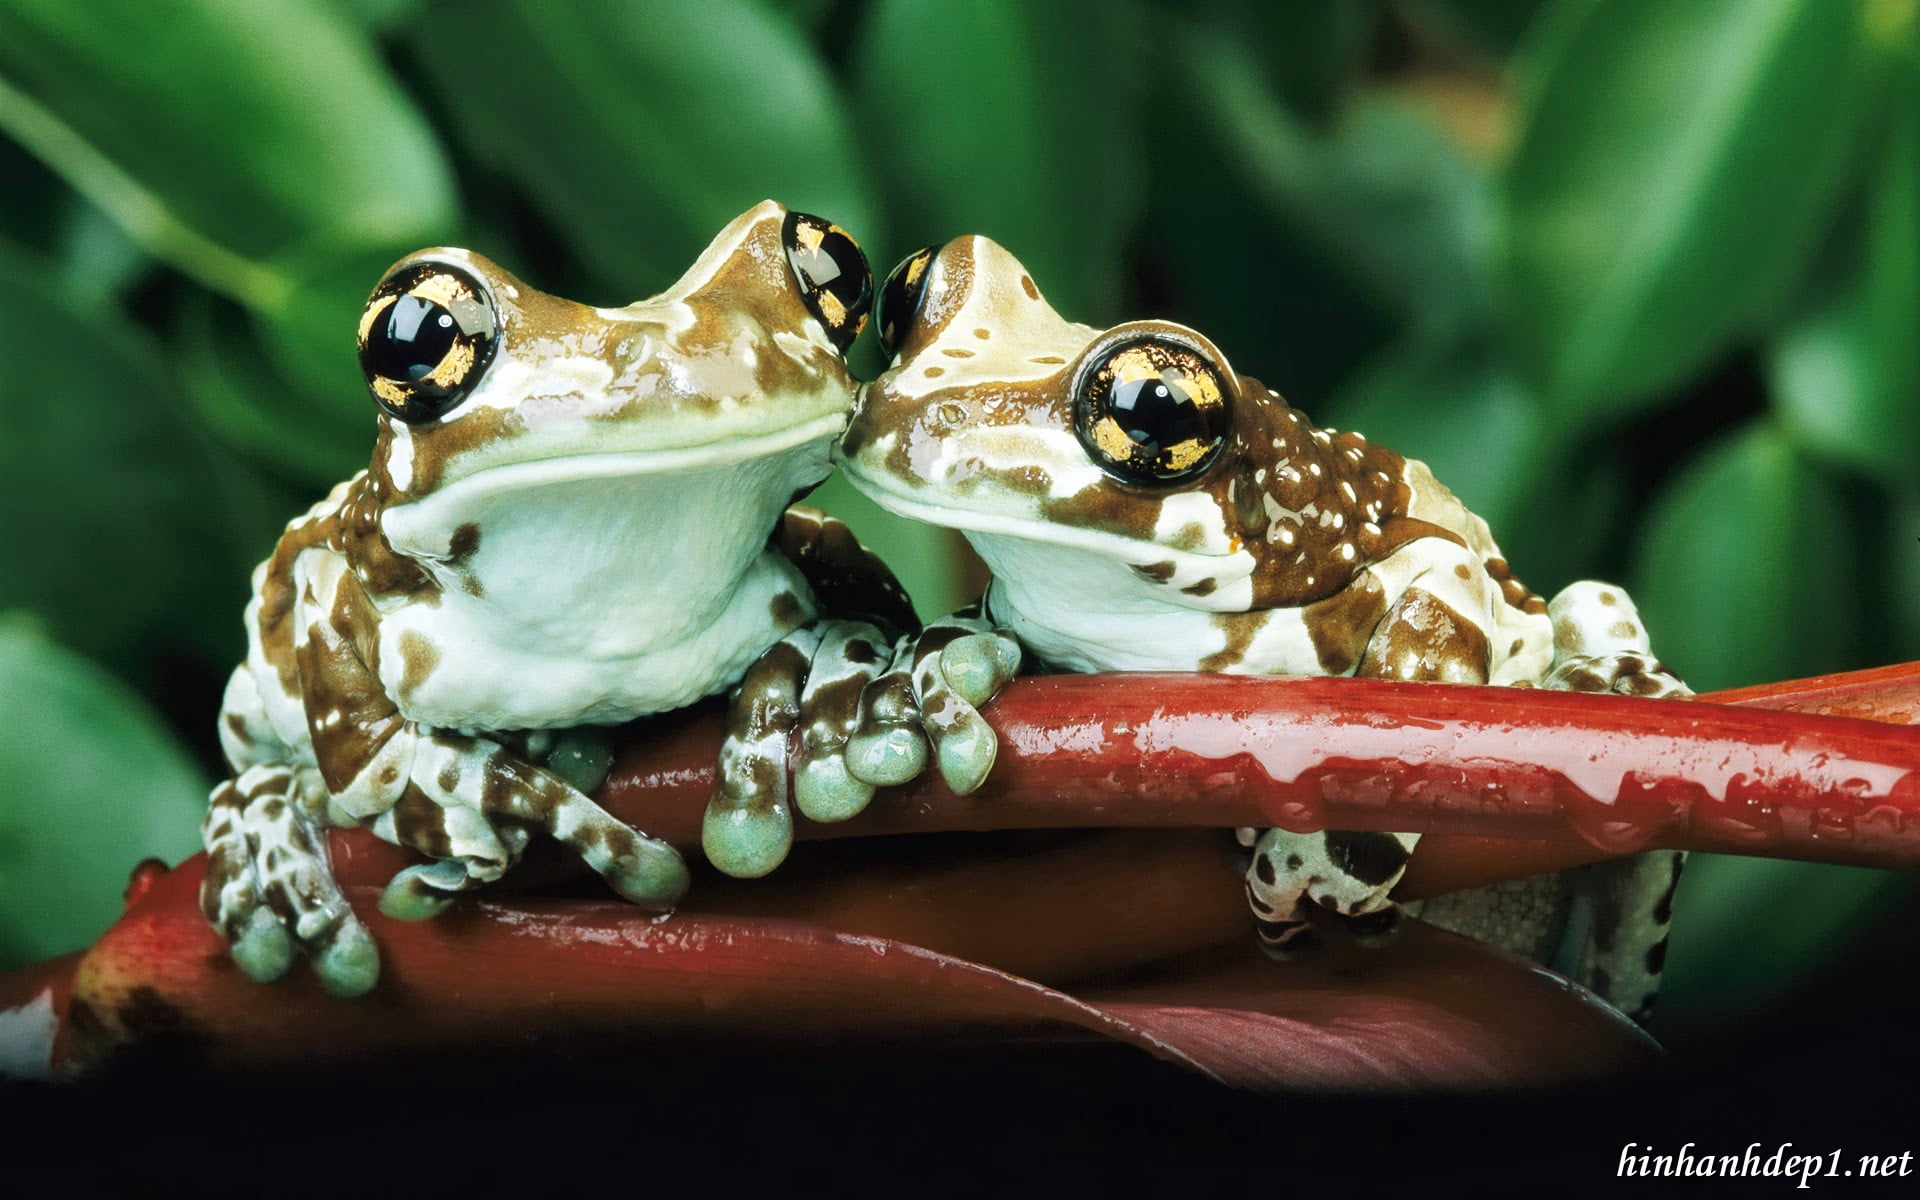 Two Amazonian milk frogs (Phrynohyas resinifictrix)